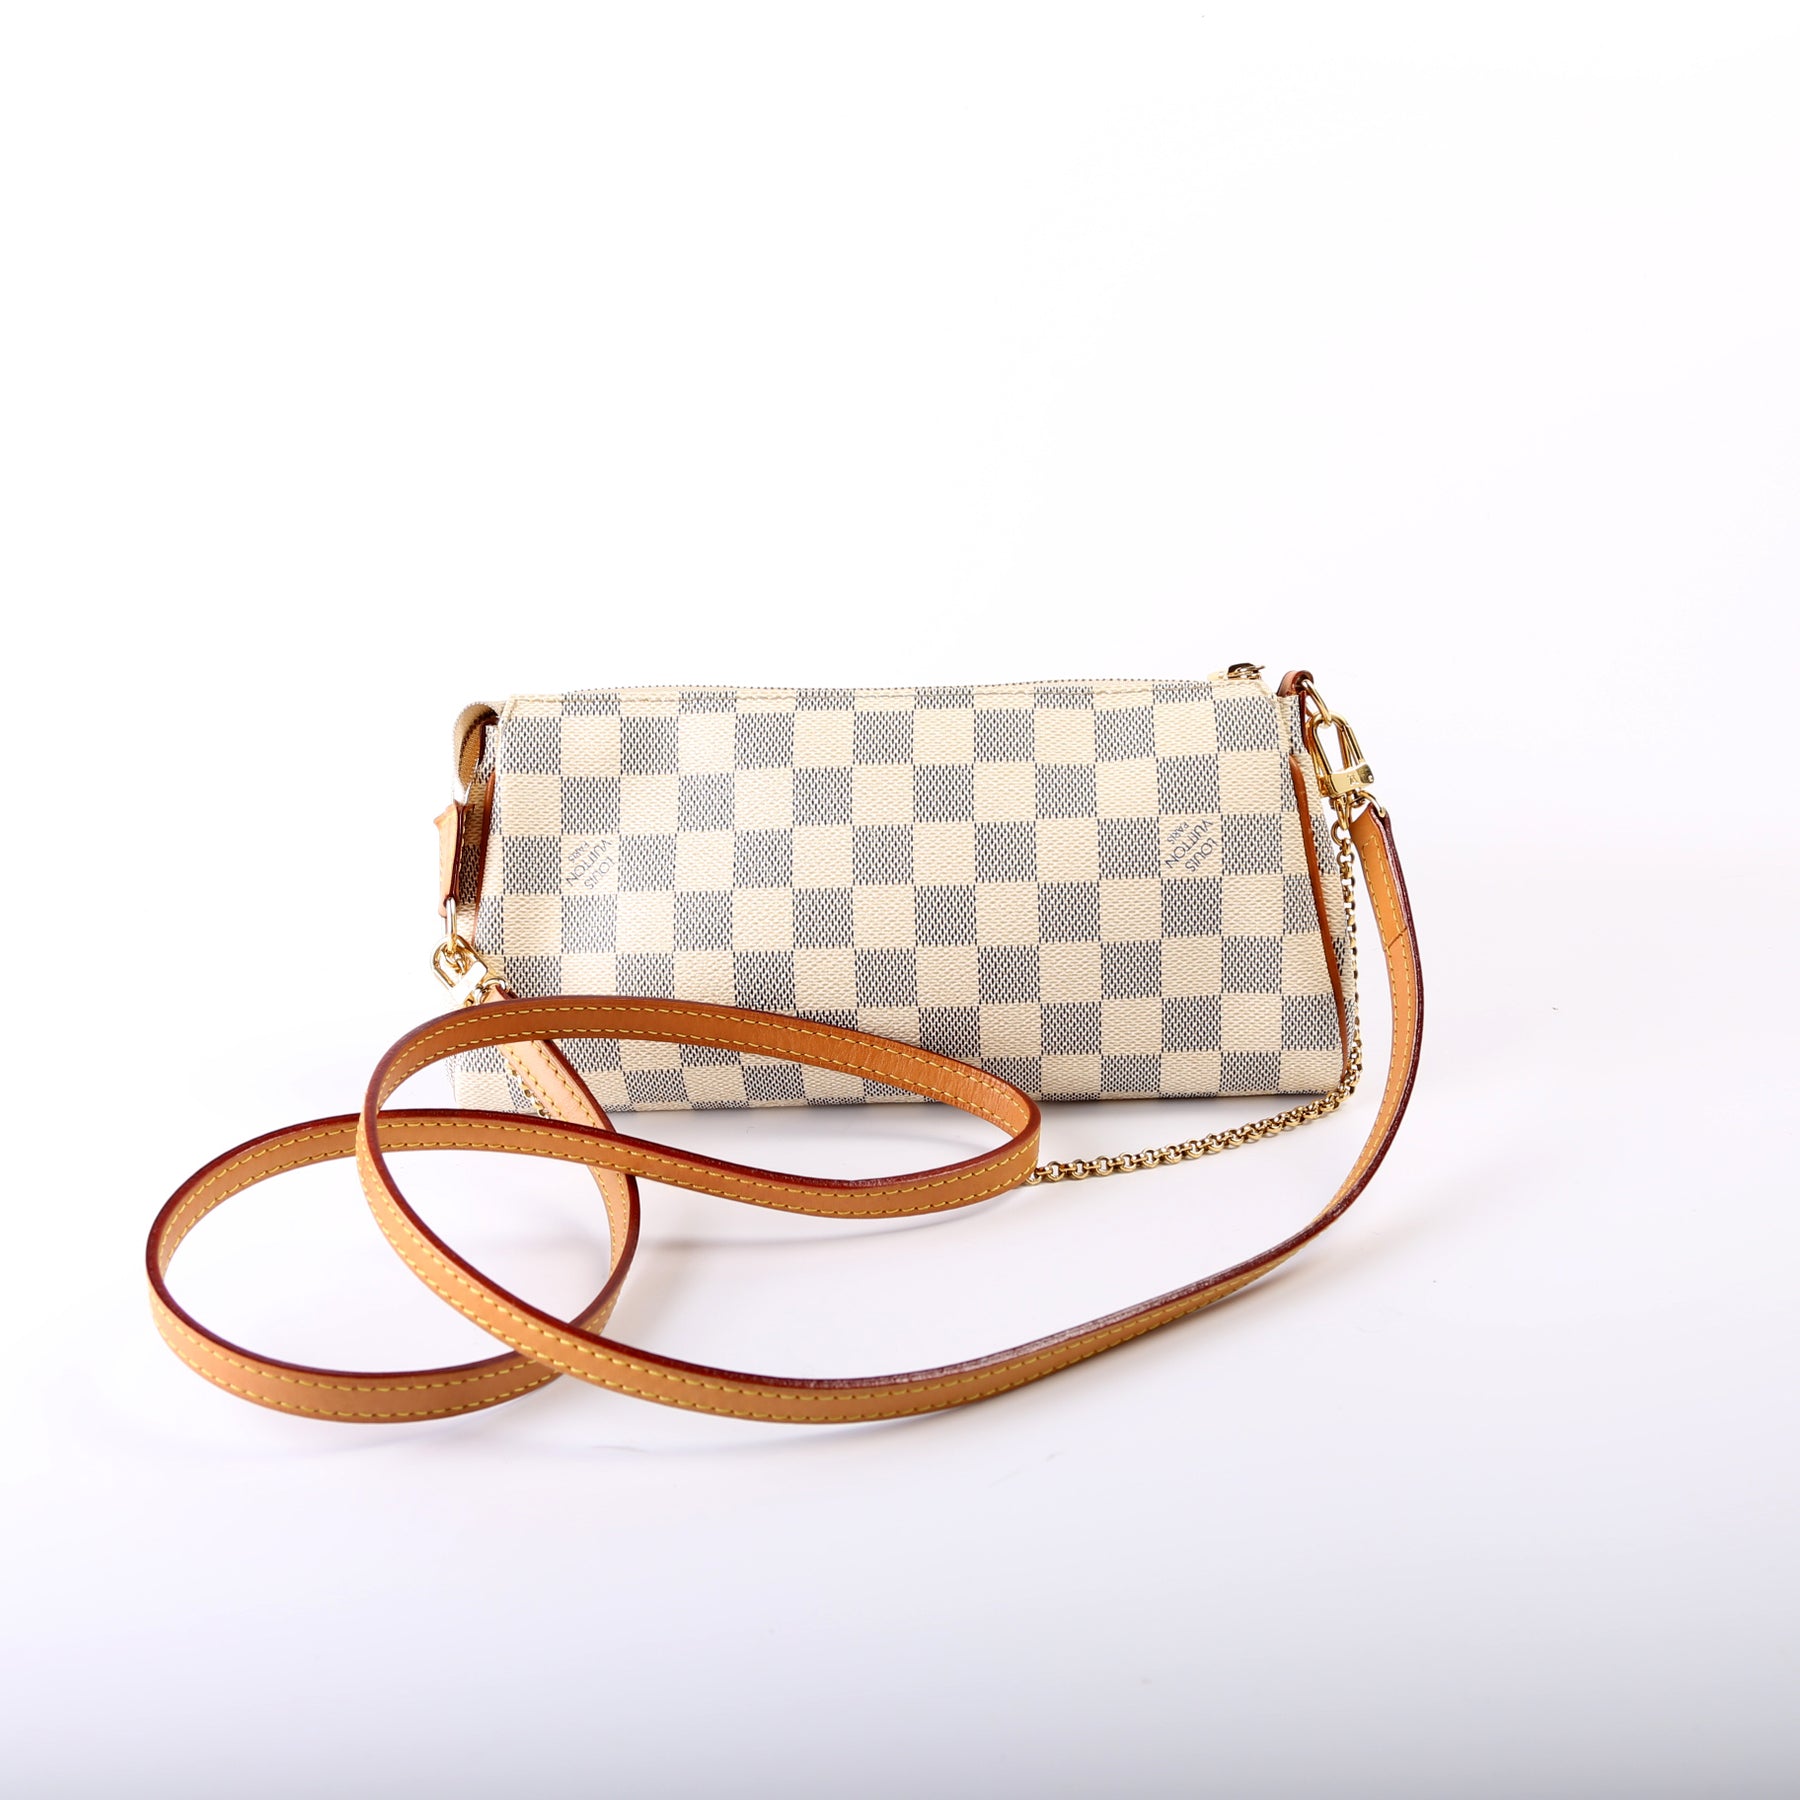 Louis Vuitton Eva Clutch in Damier Azur Handbag - Authentic Pre-Owned Designer Handbags